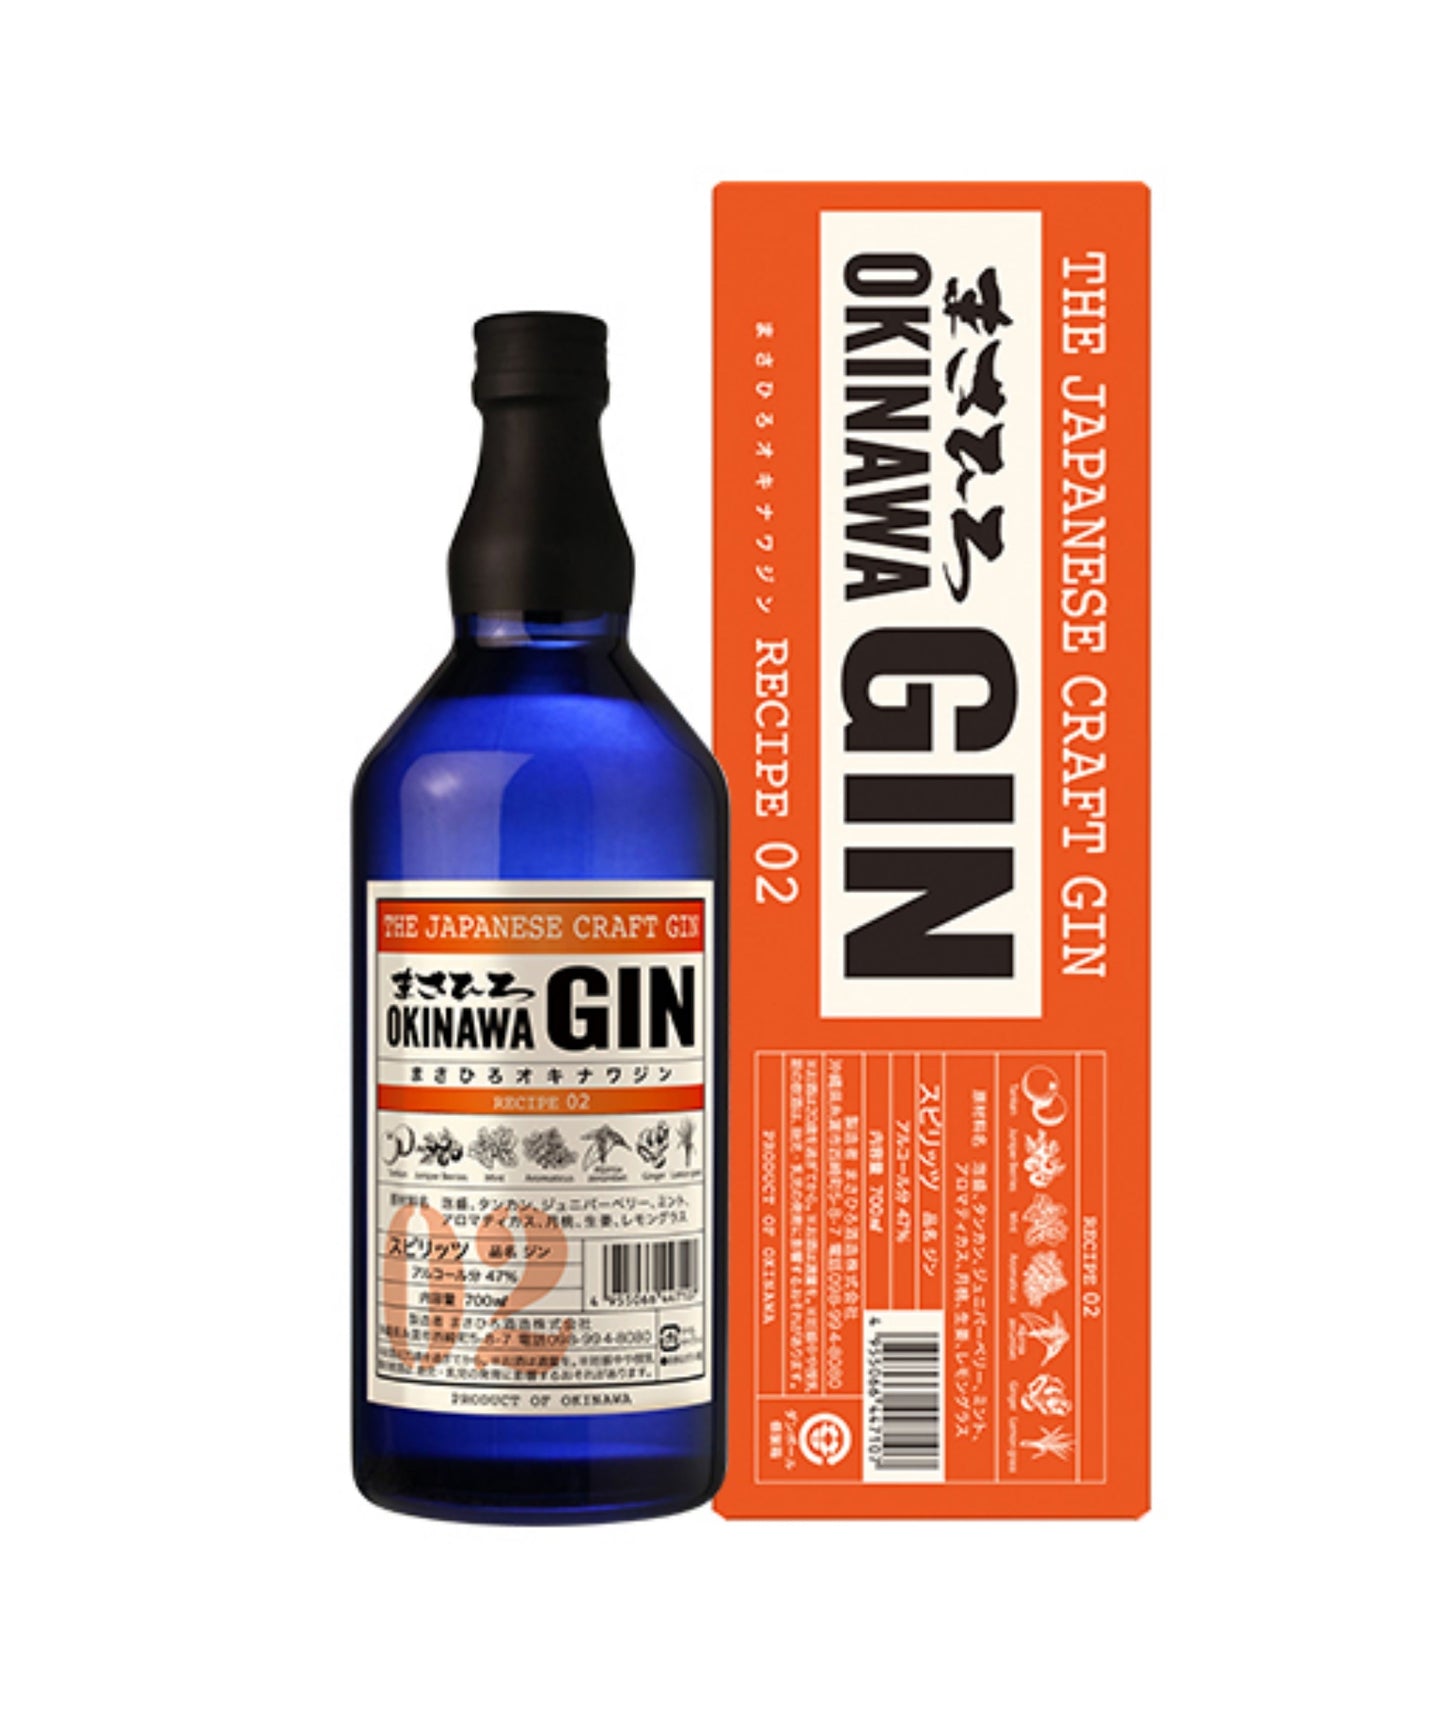 Okinawa Gin Recipe 2 沖縄ジン 沖繩琴酒 NEW